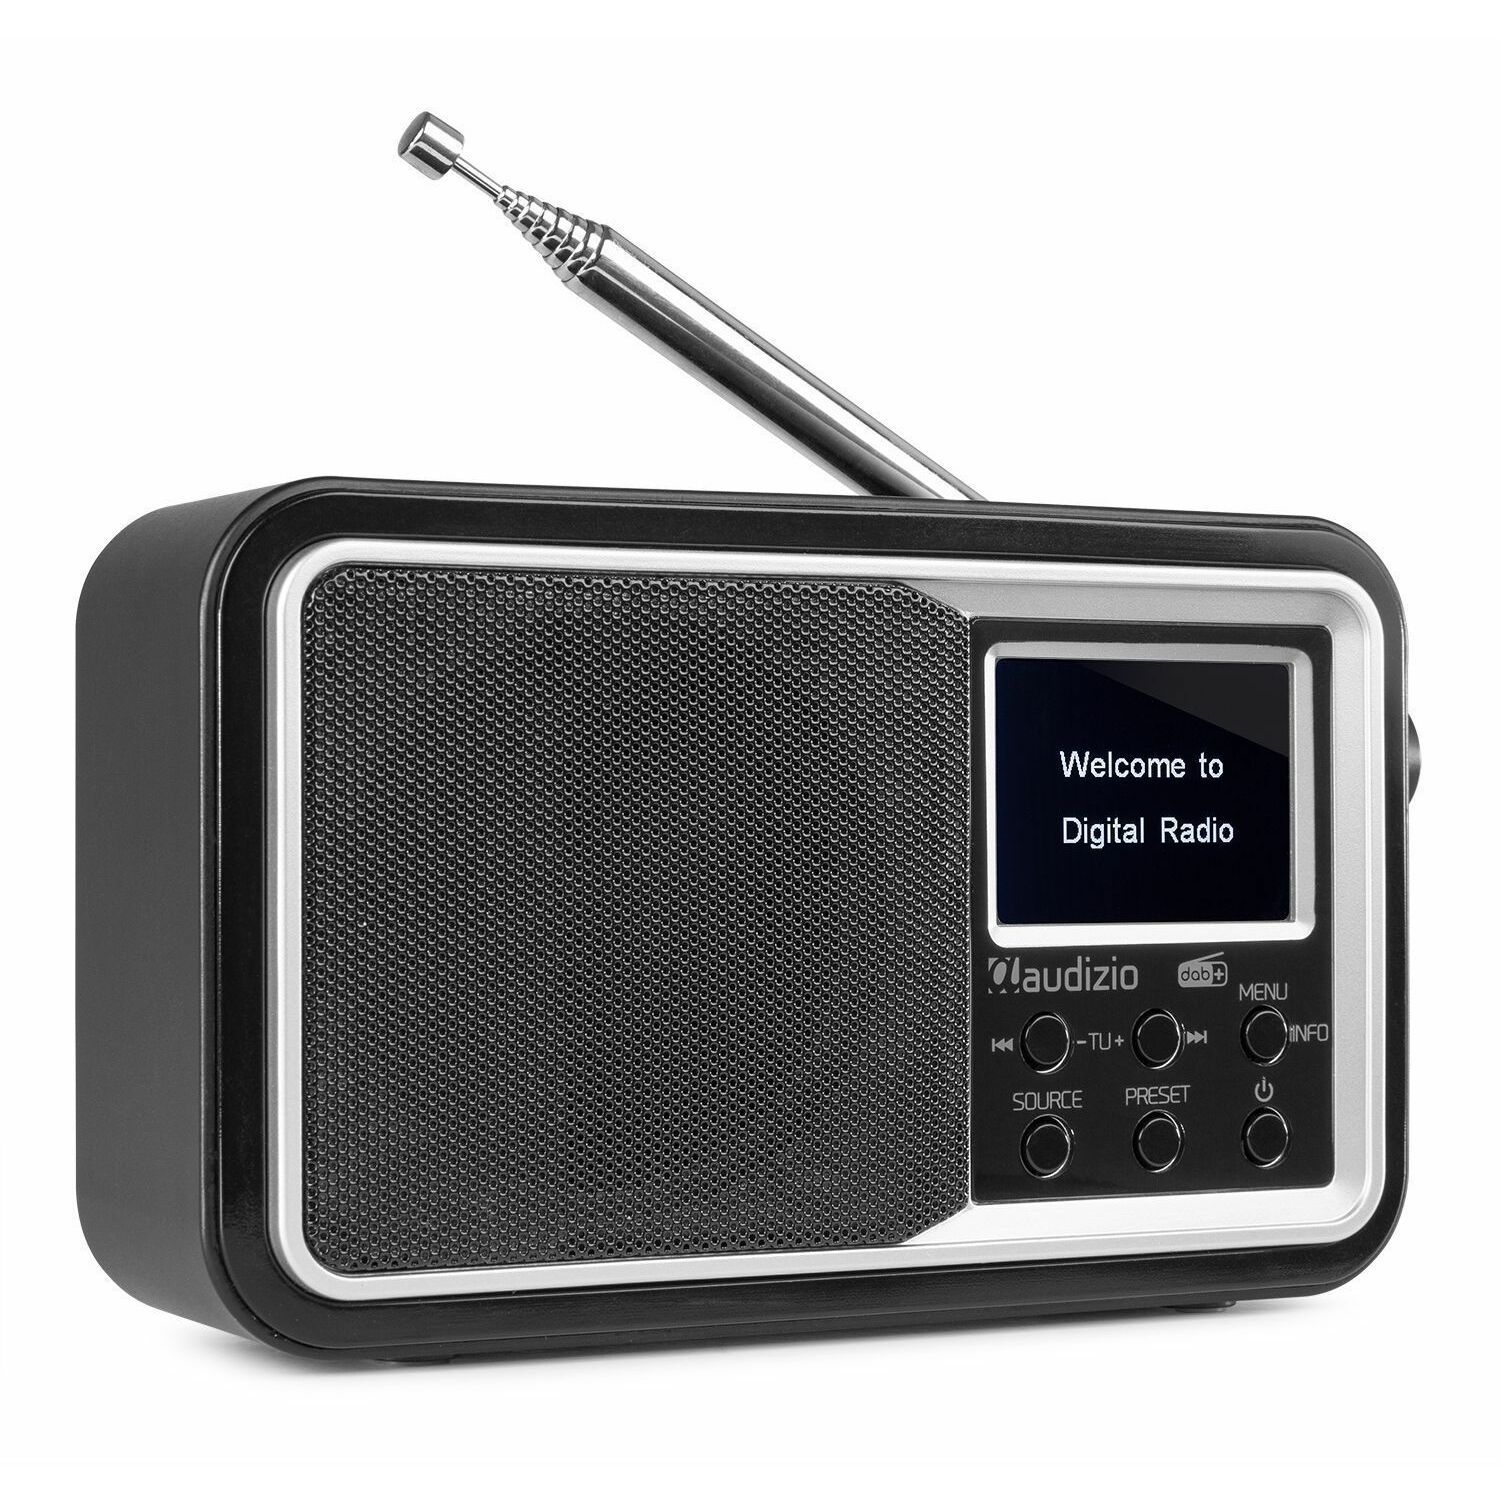 zuur Oraal halfrond Audizio Parma draagbare DAB radio met Bluetooth en FM radio - Zwart kopen?